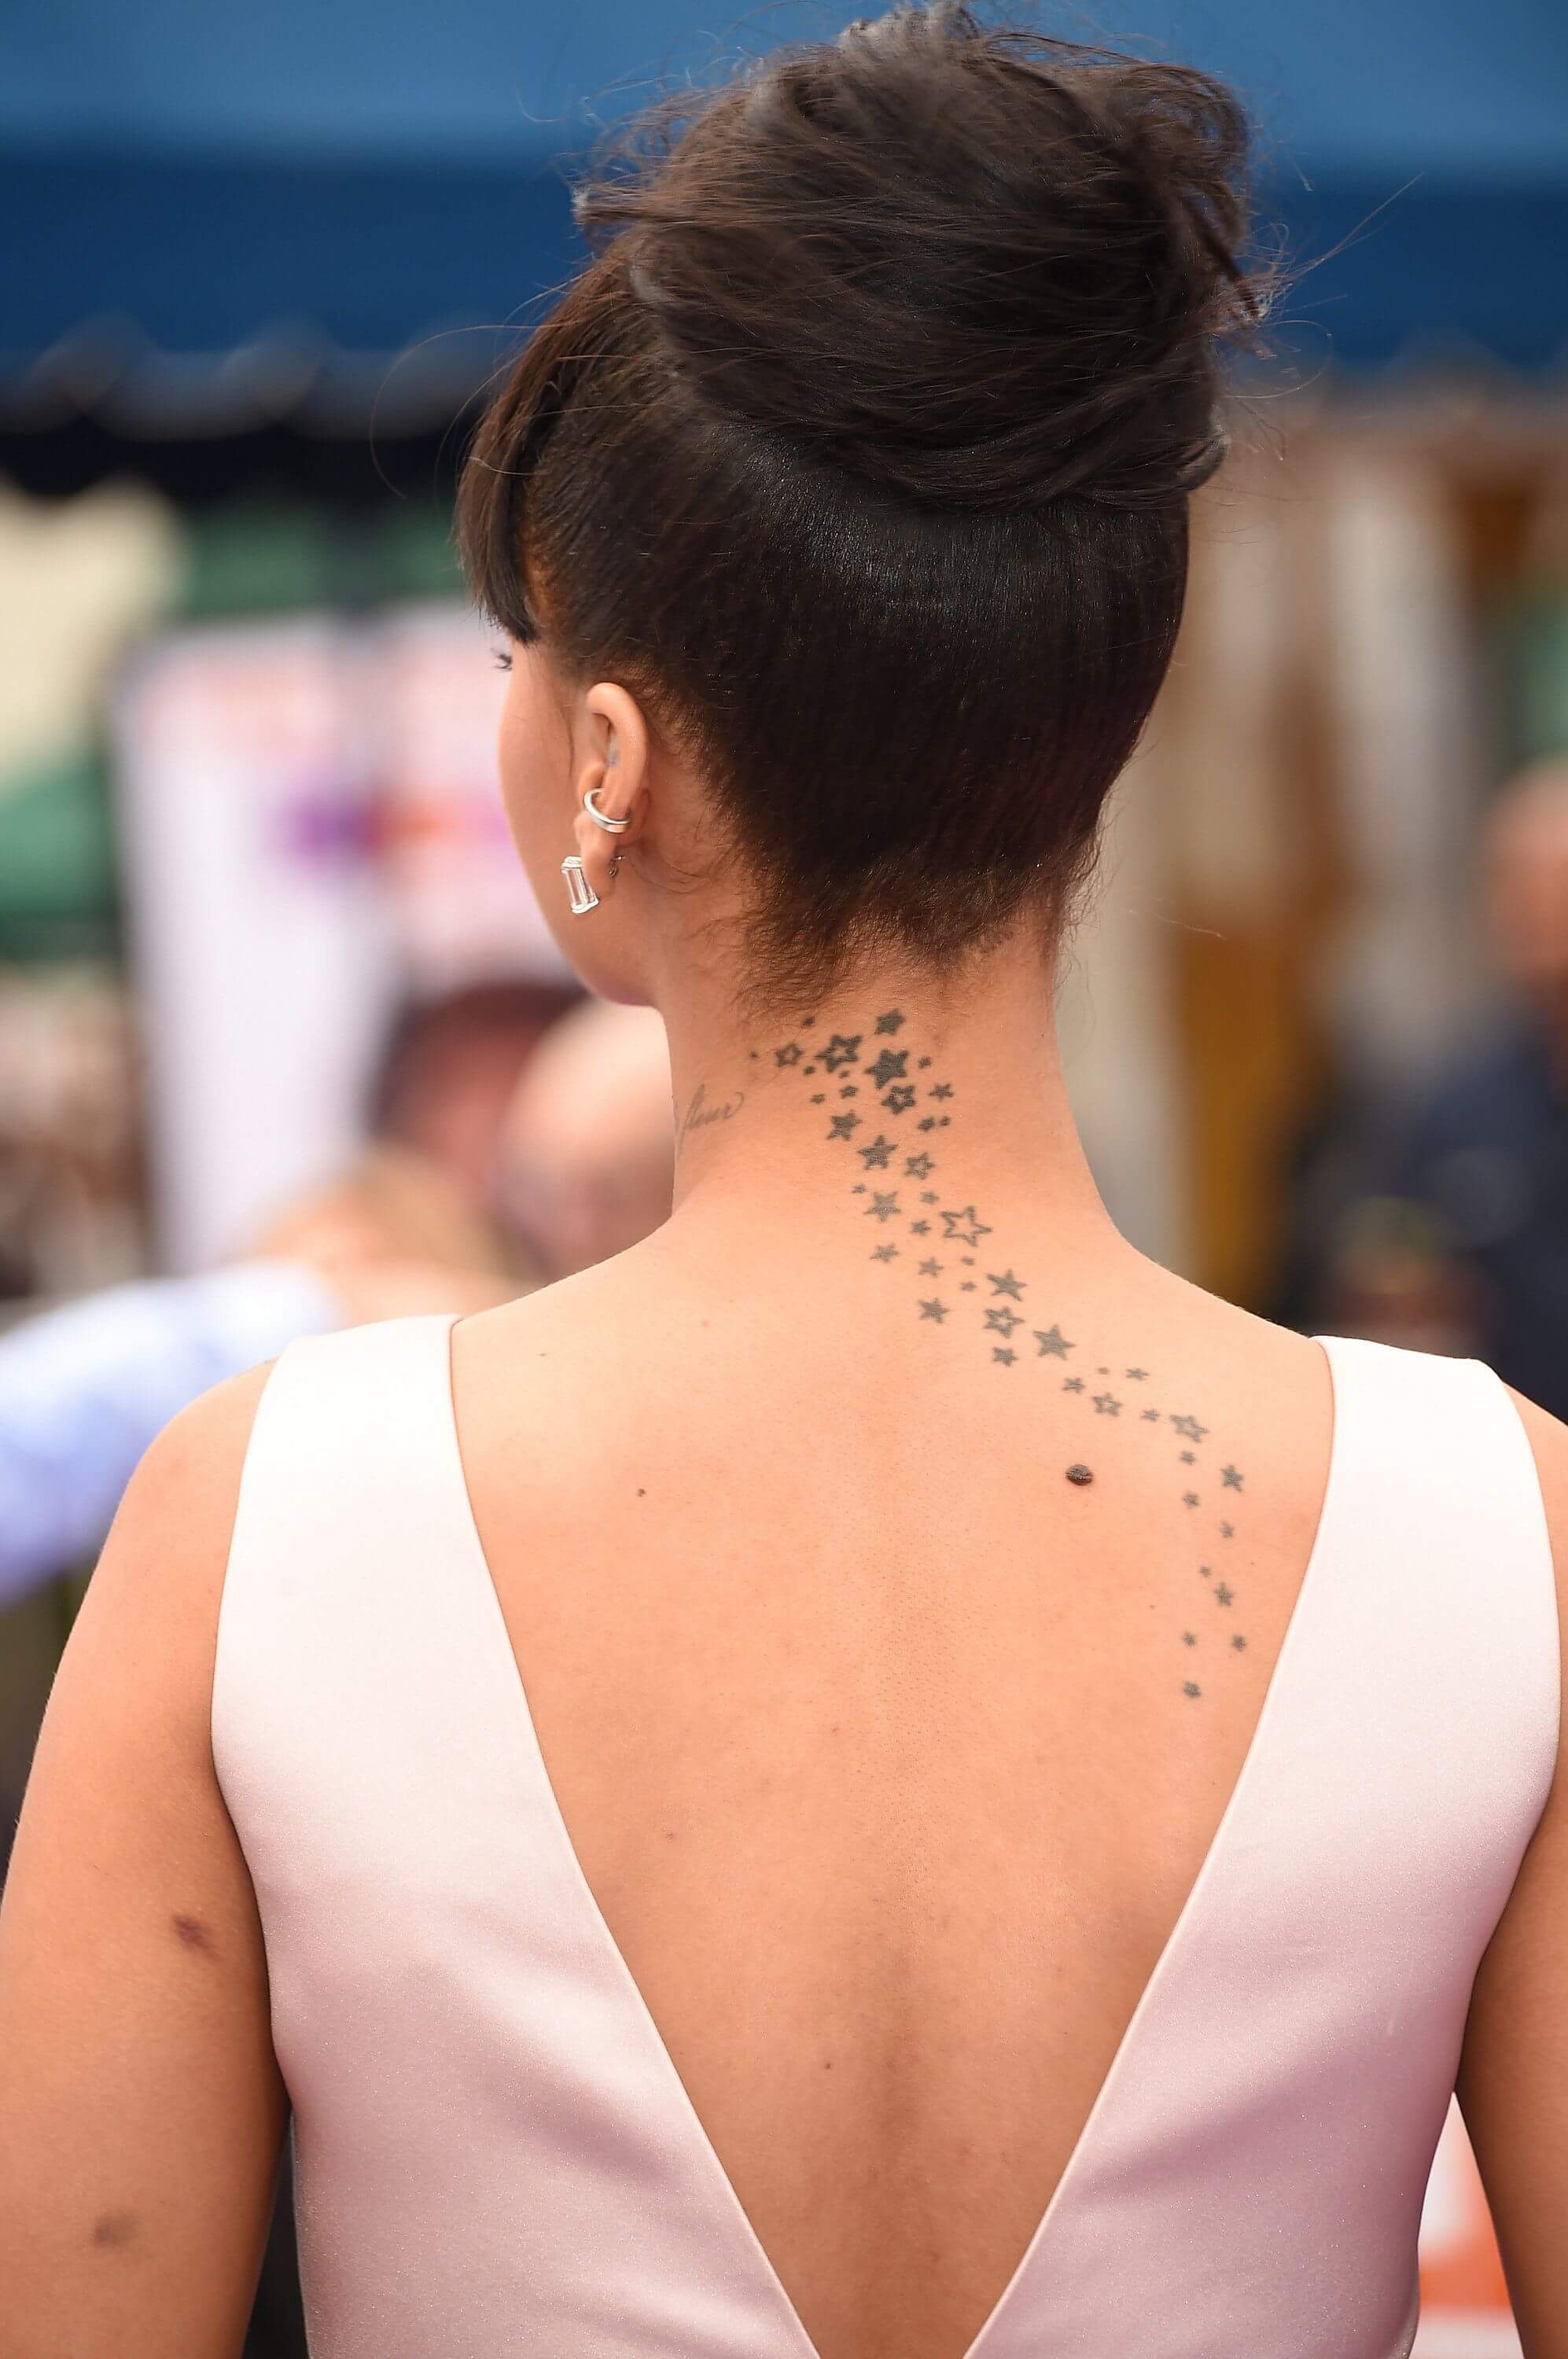  Celebrity Tattoos Female